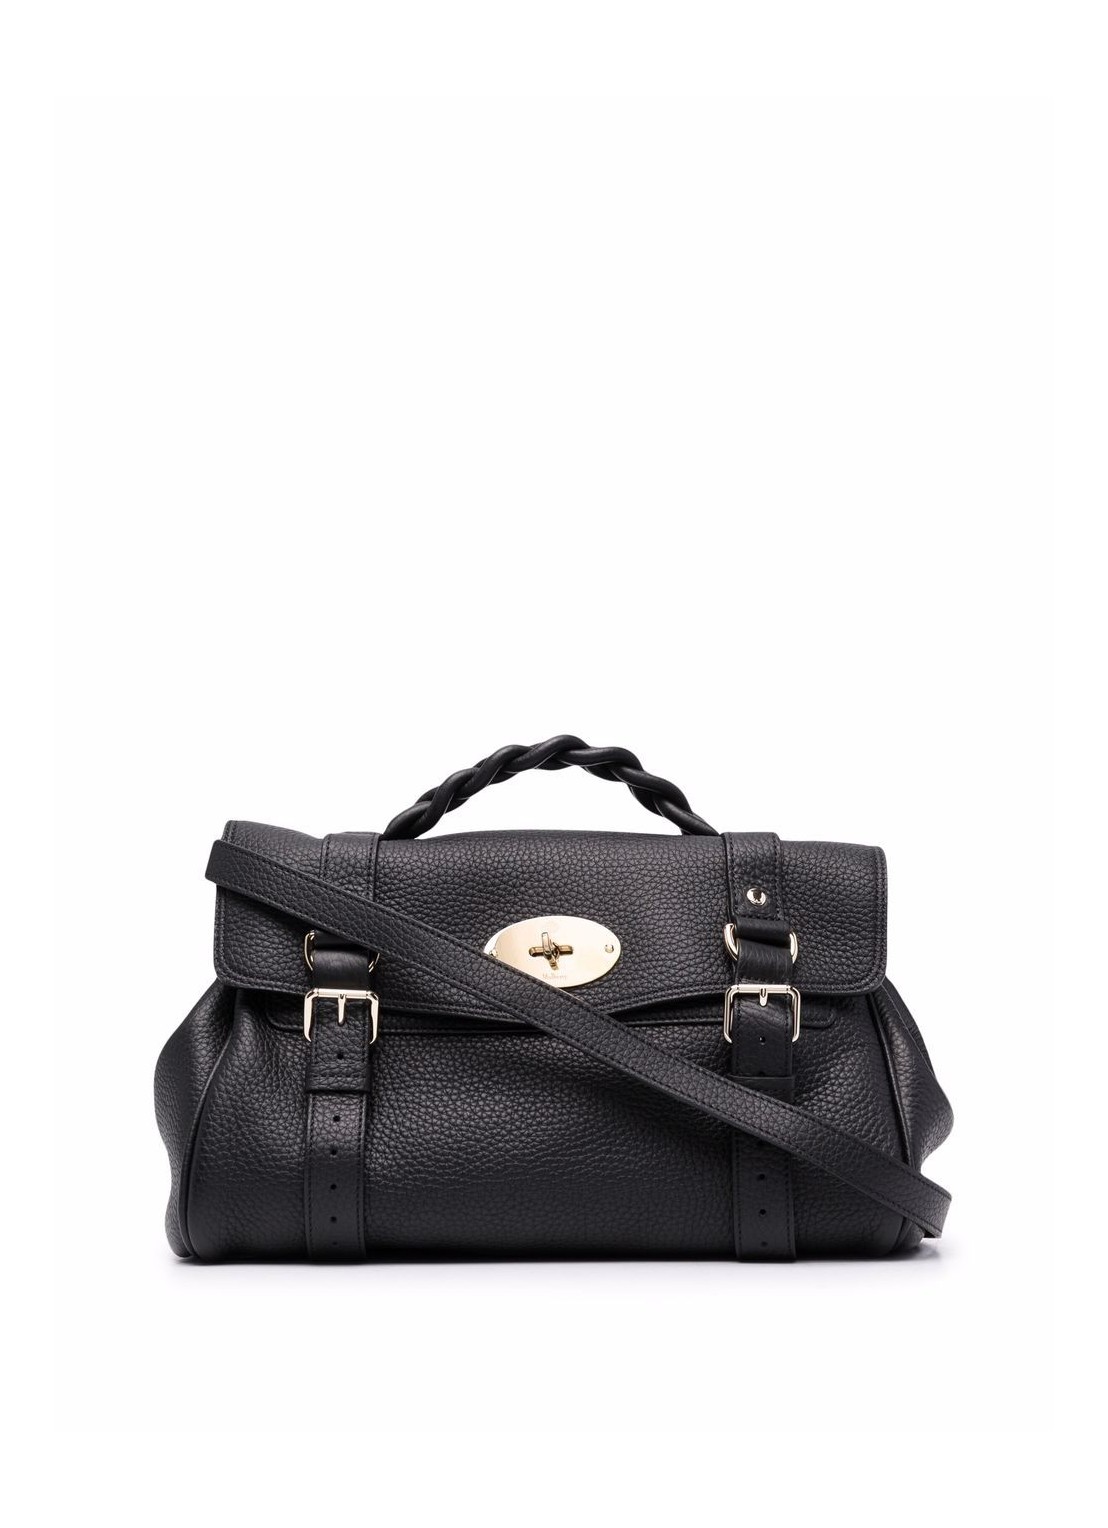 Handbag mulberry handbag woman alexa heavy grain hh6746736 a100 talla negro
 